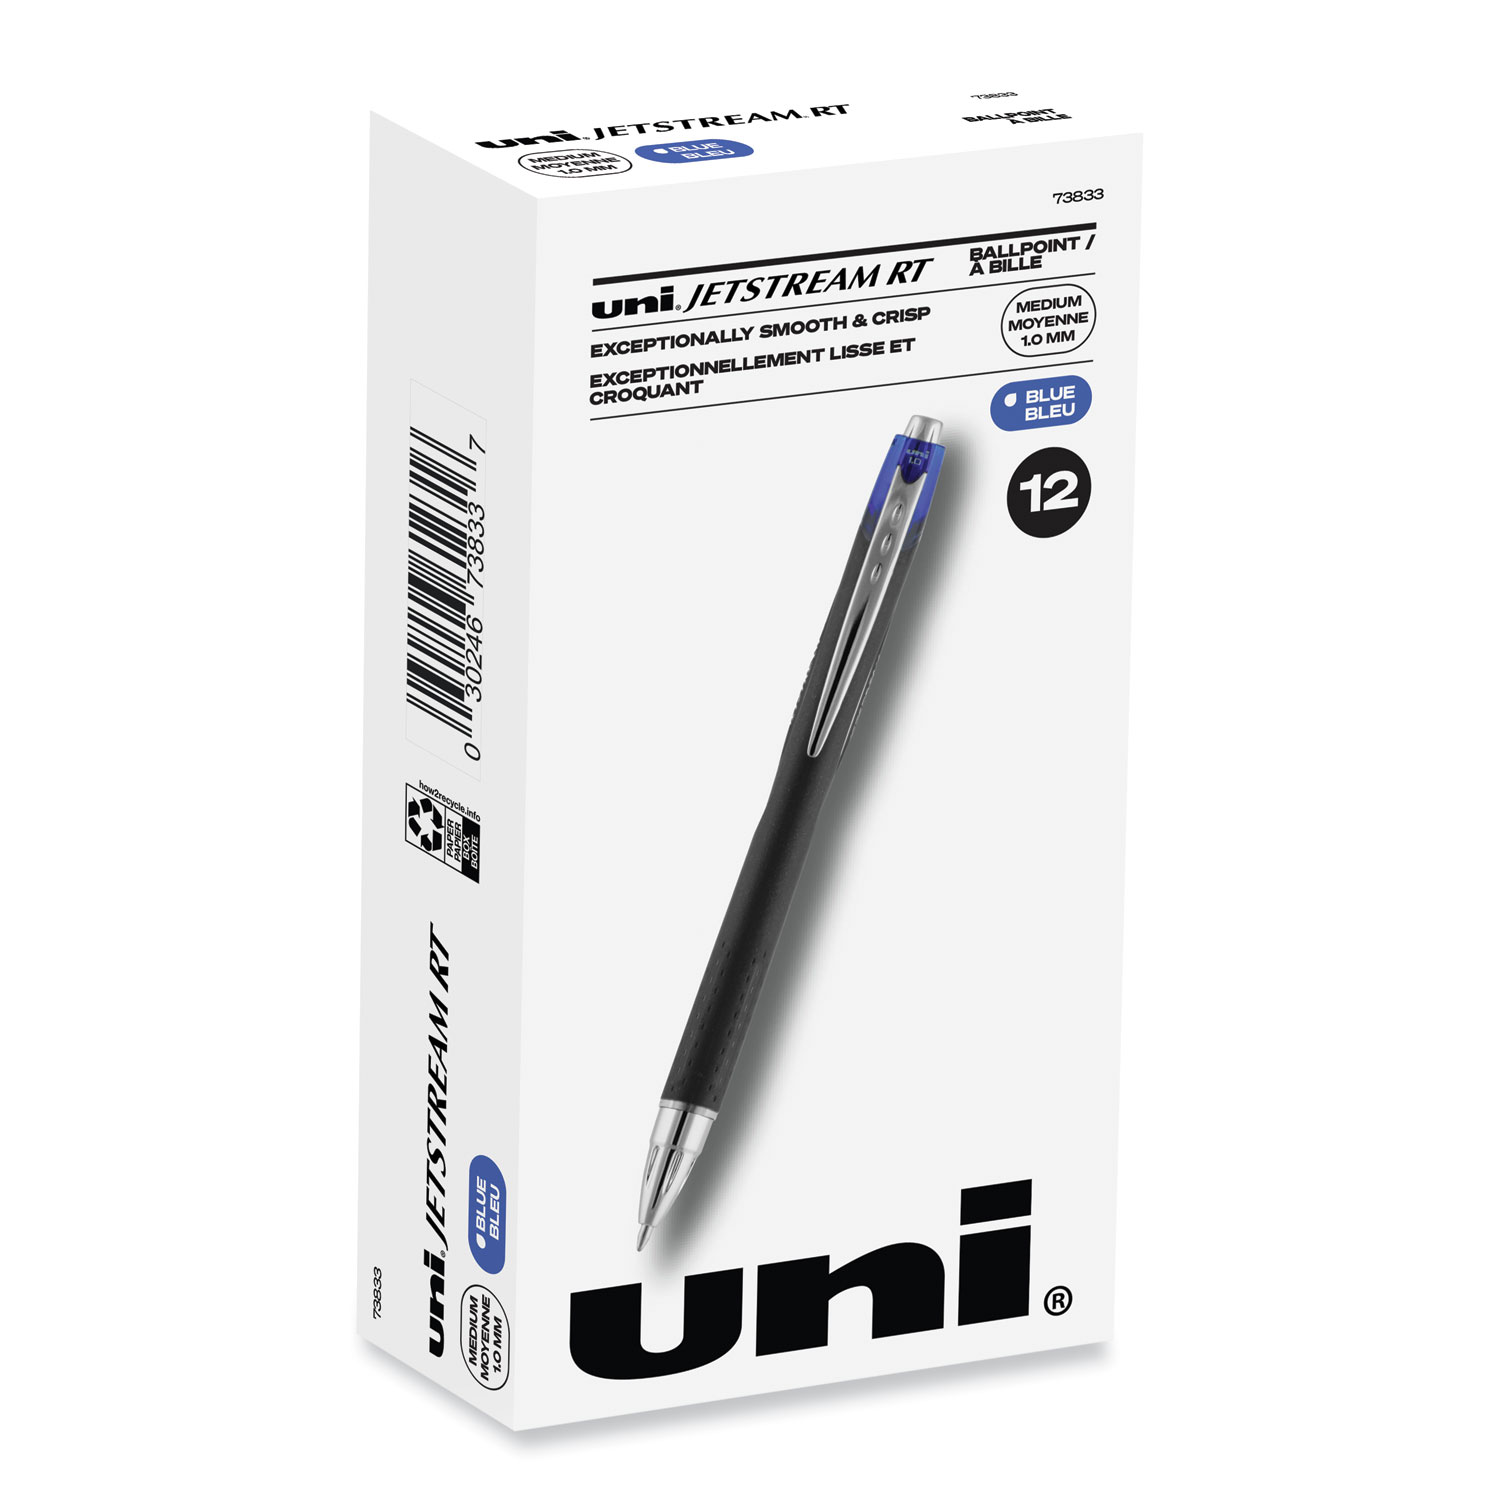 Bold & Bright Hybrid Colored Ink Pens - U Brands 6 ct